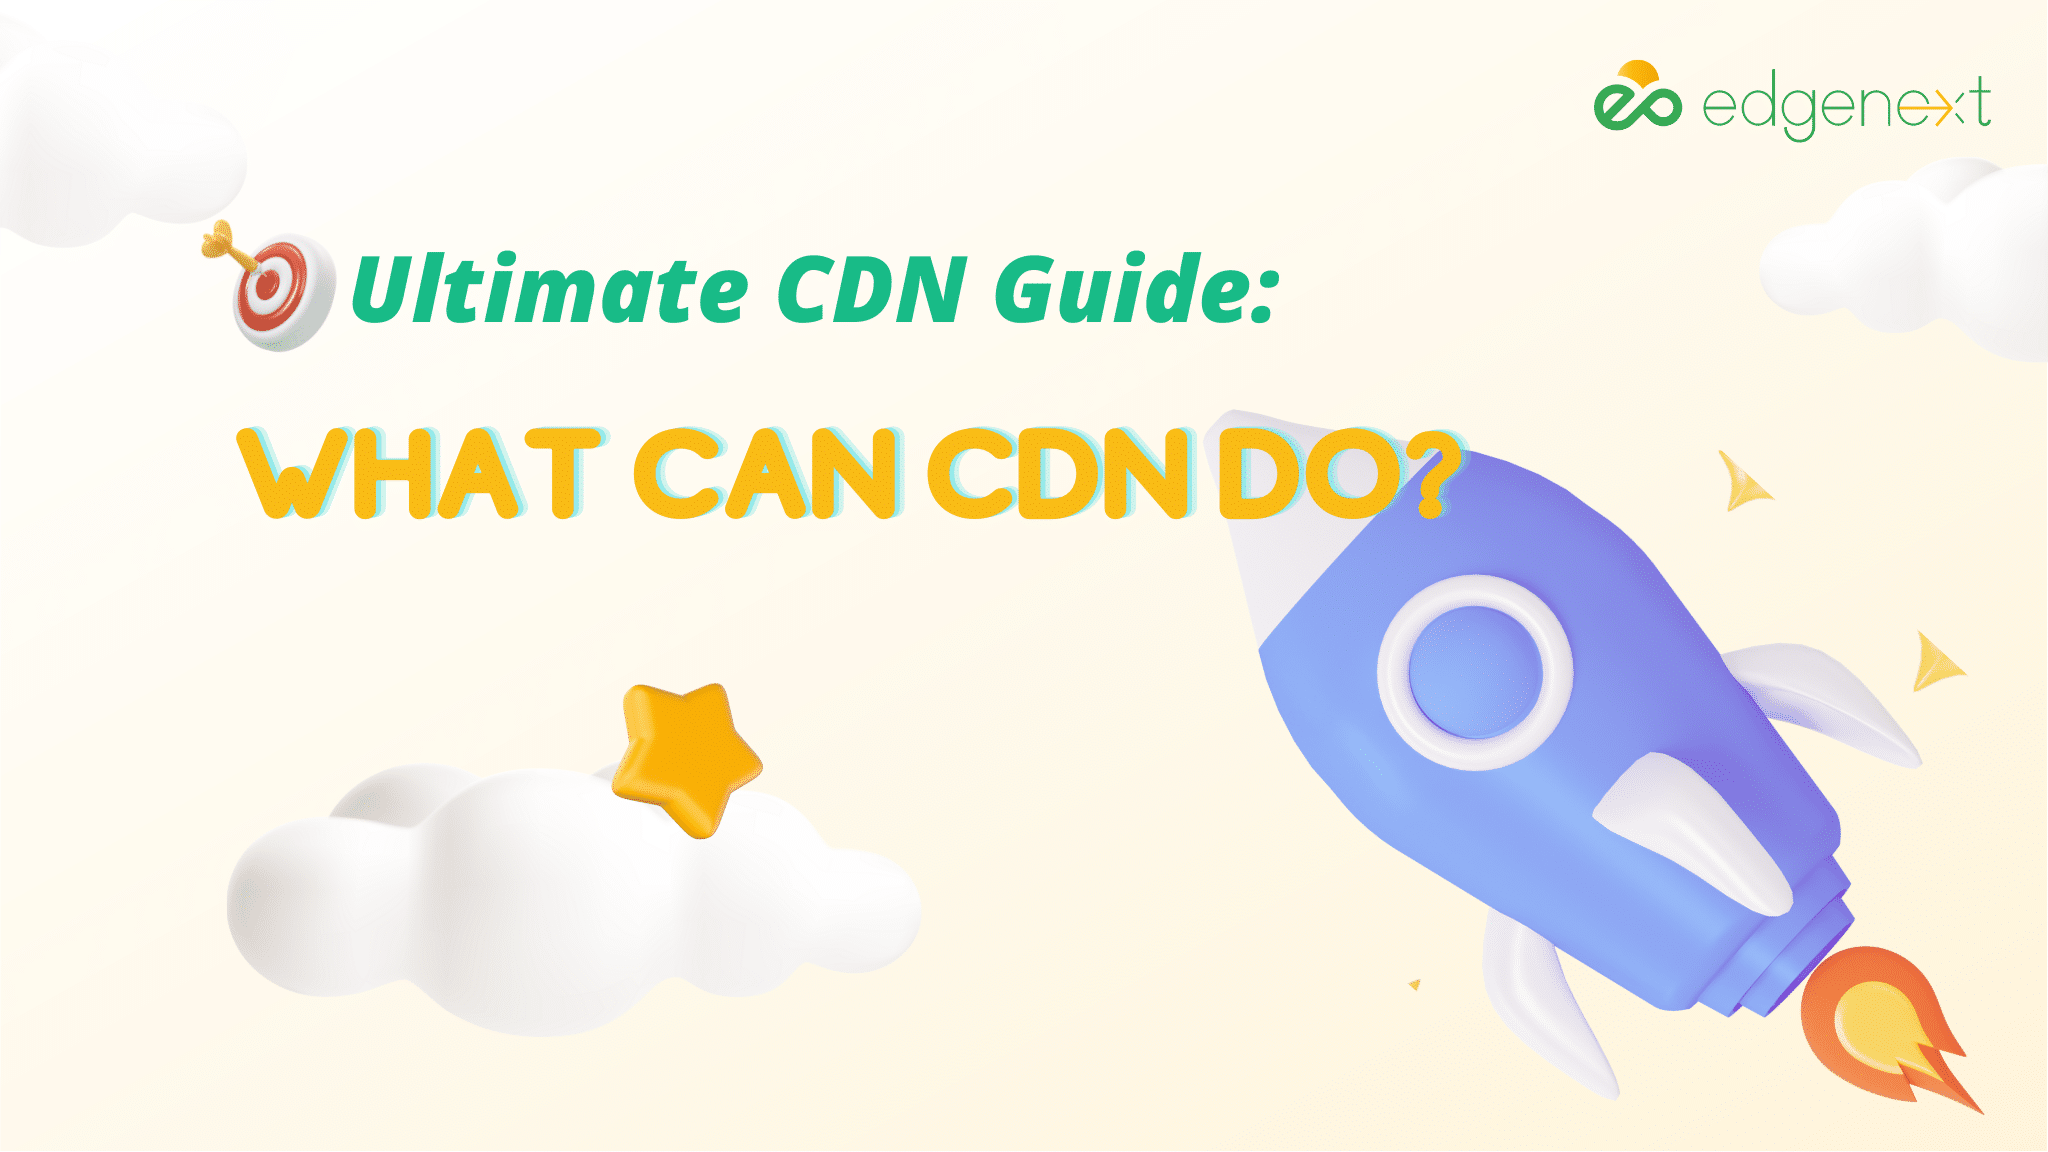 What can CDN do? 